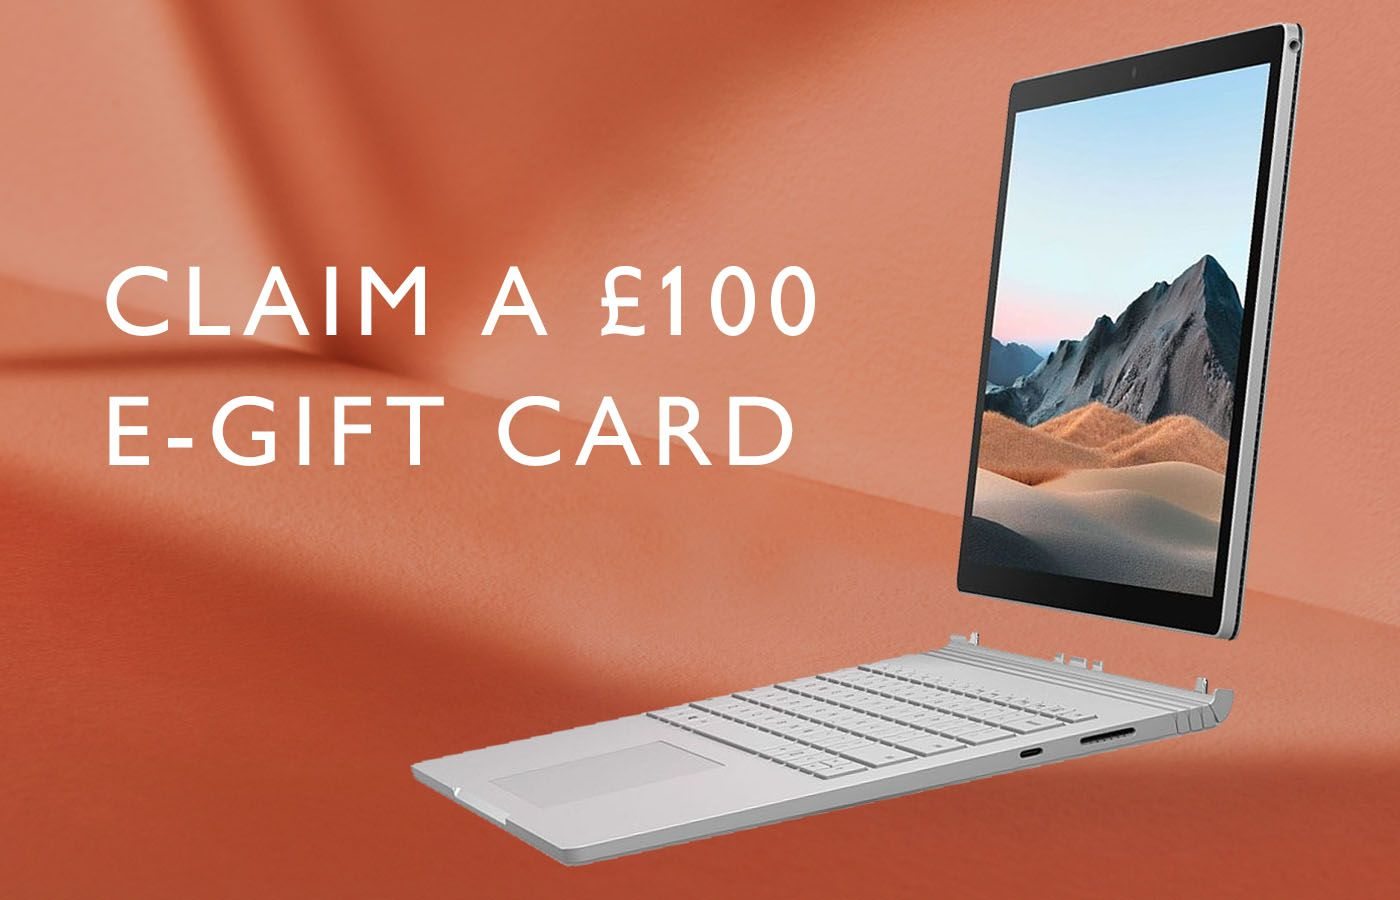 Claim a £100 e-gift card